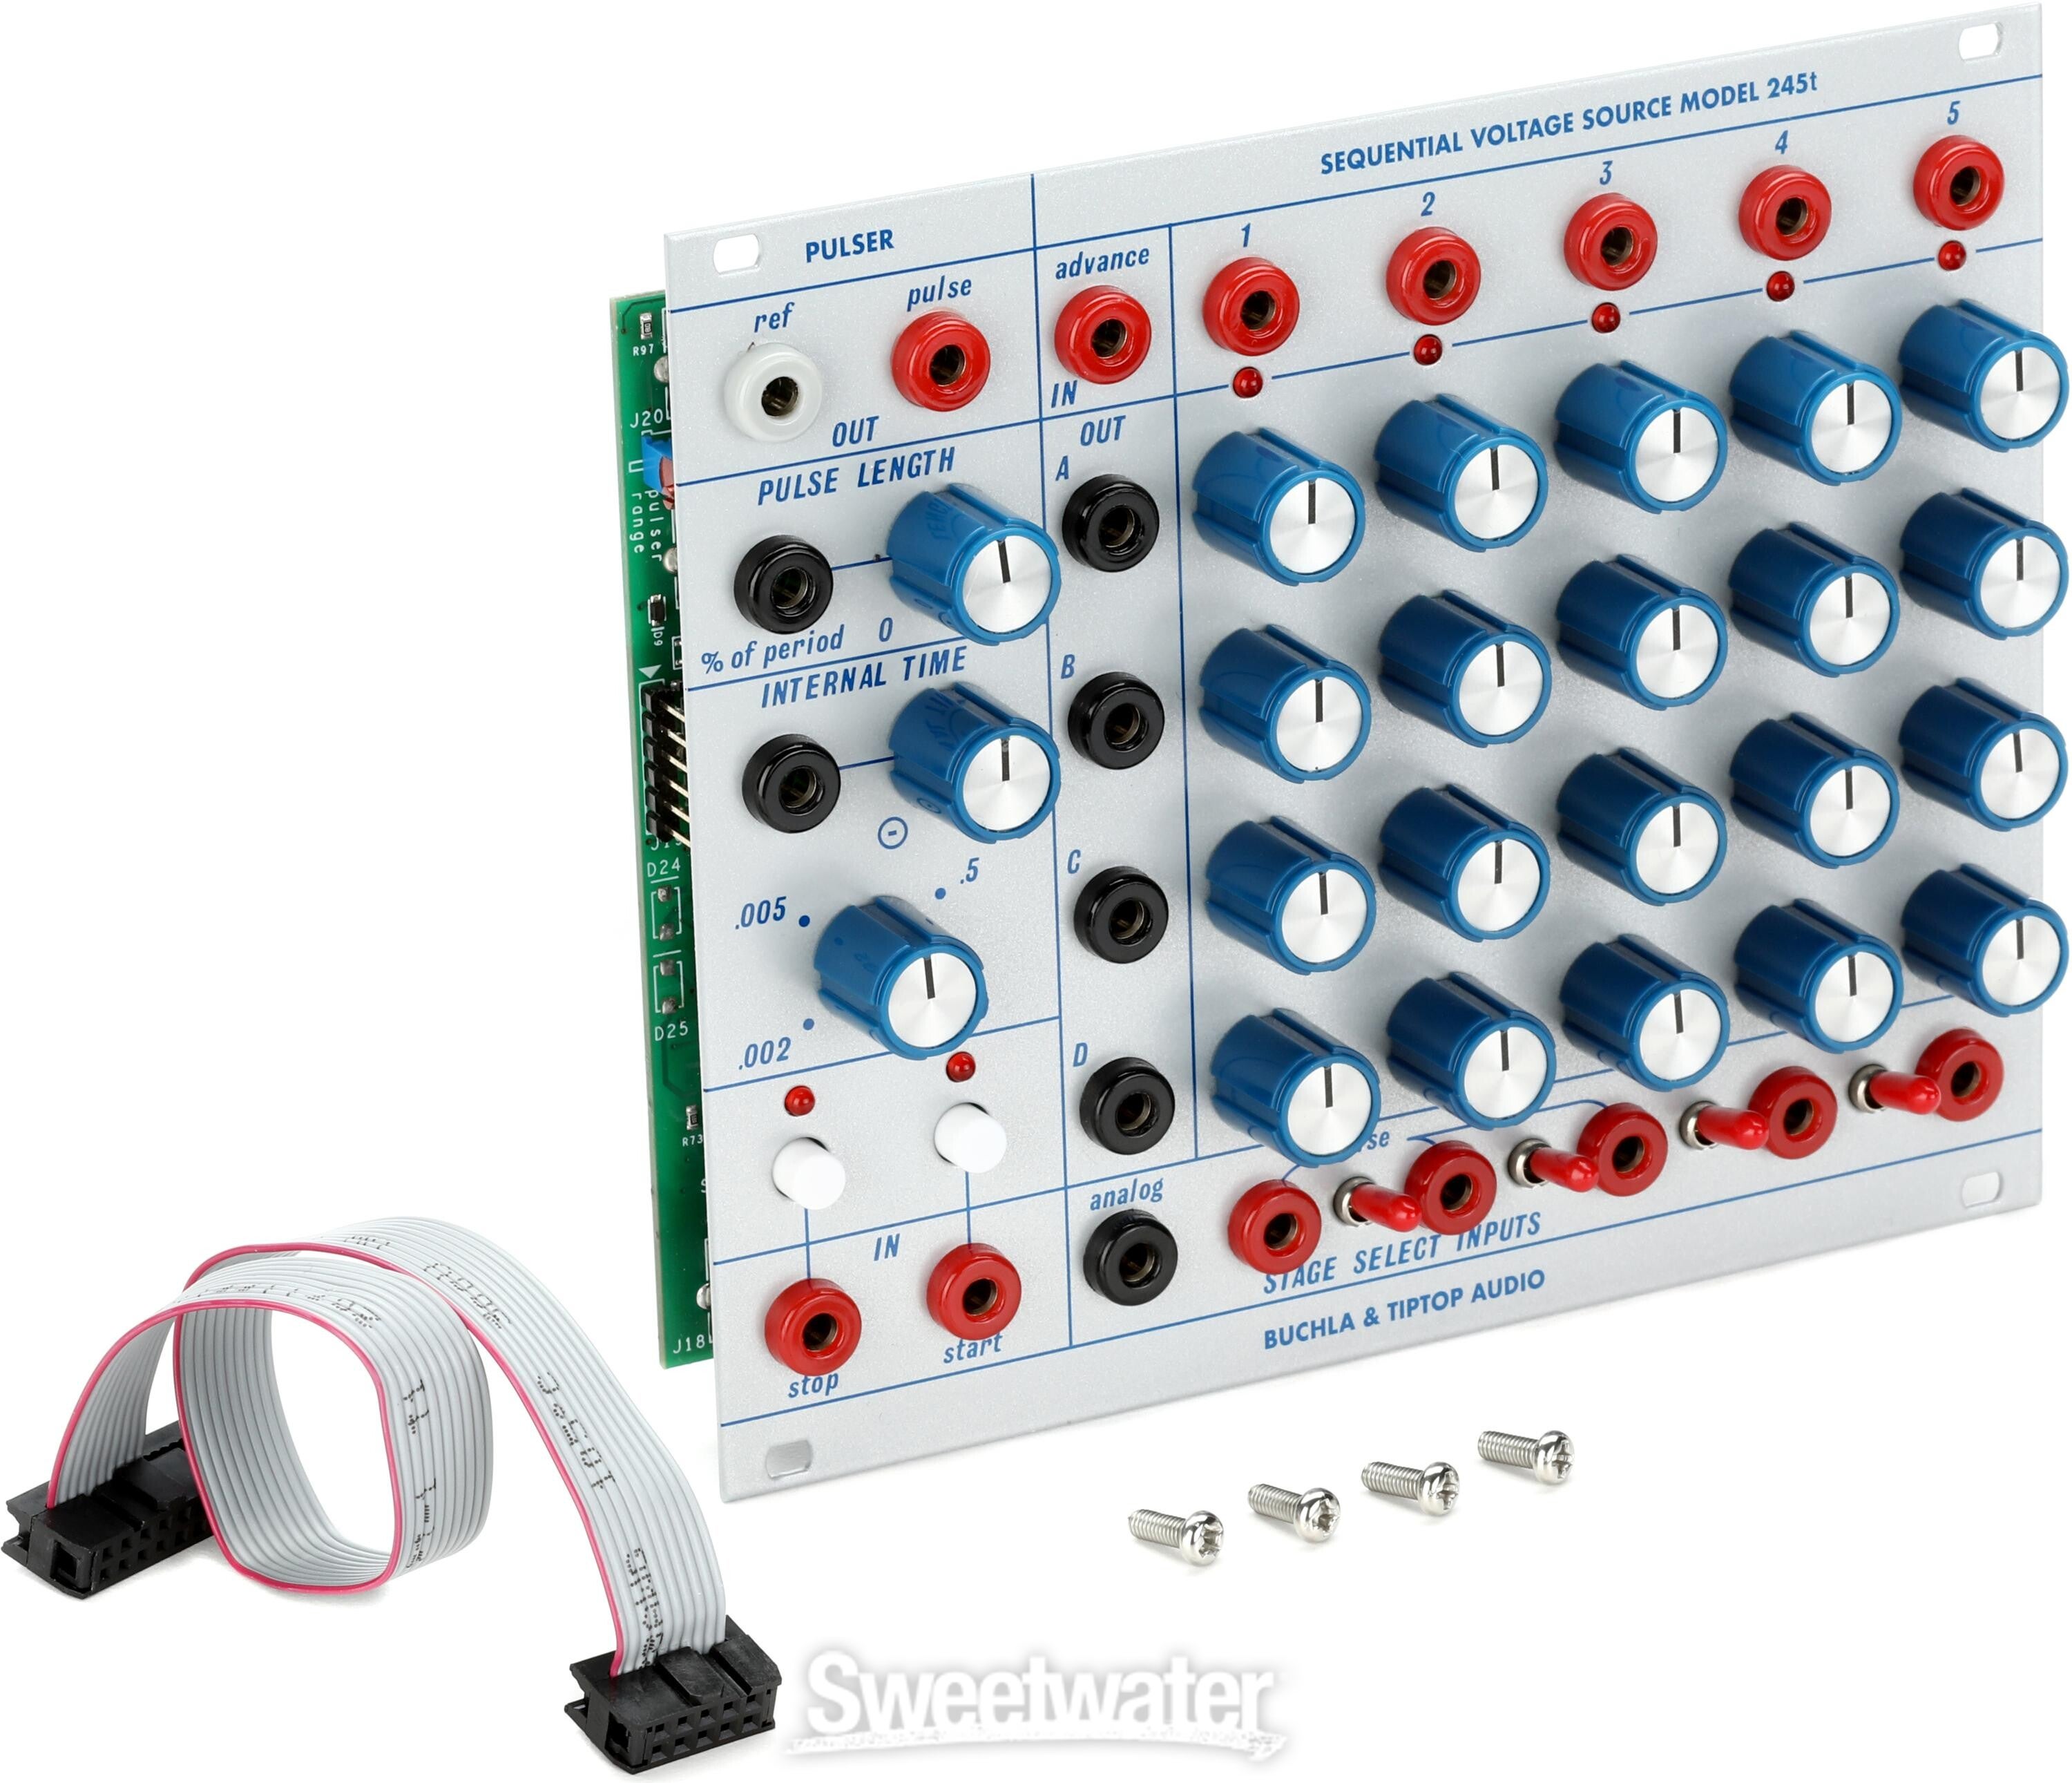 Tiptop Audio Buchla 245t Sequential Voltage Source Eurorack Module-